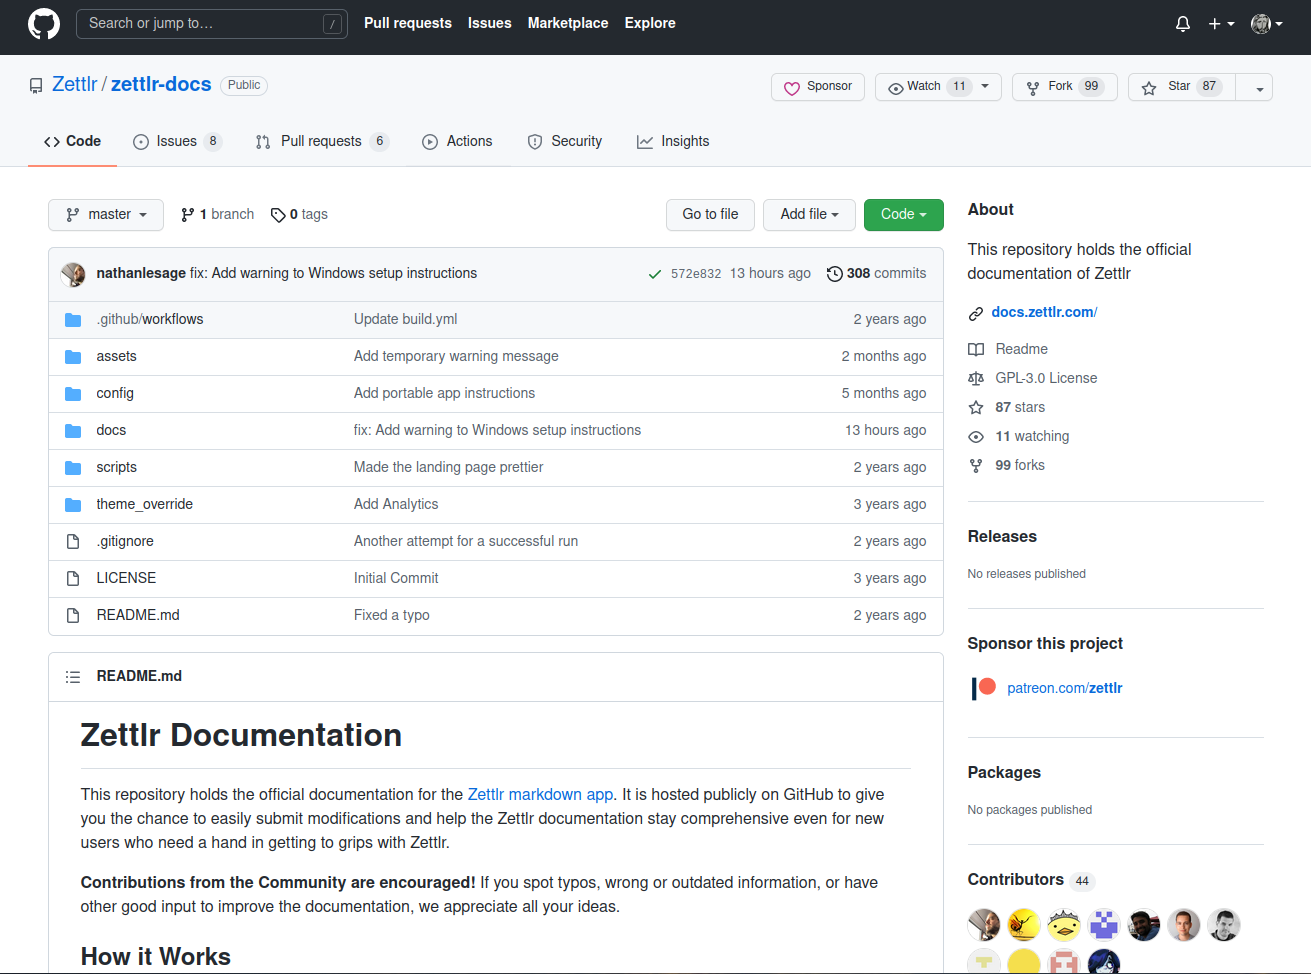 The Zettlr documentation repository on Github